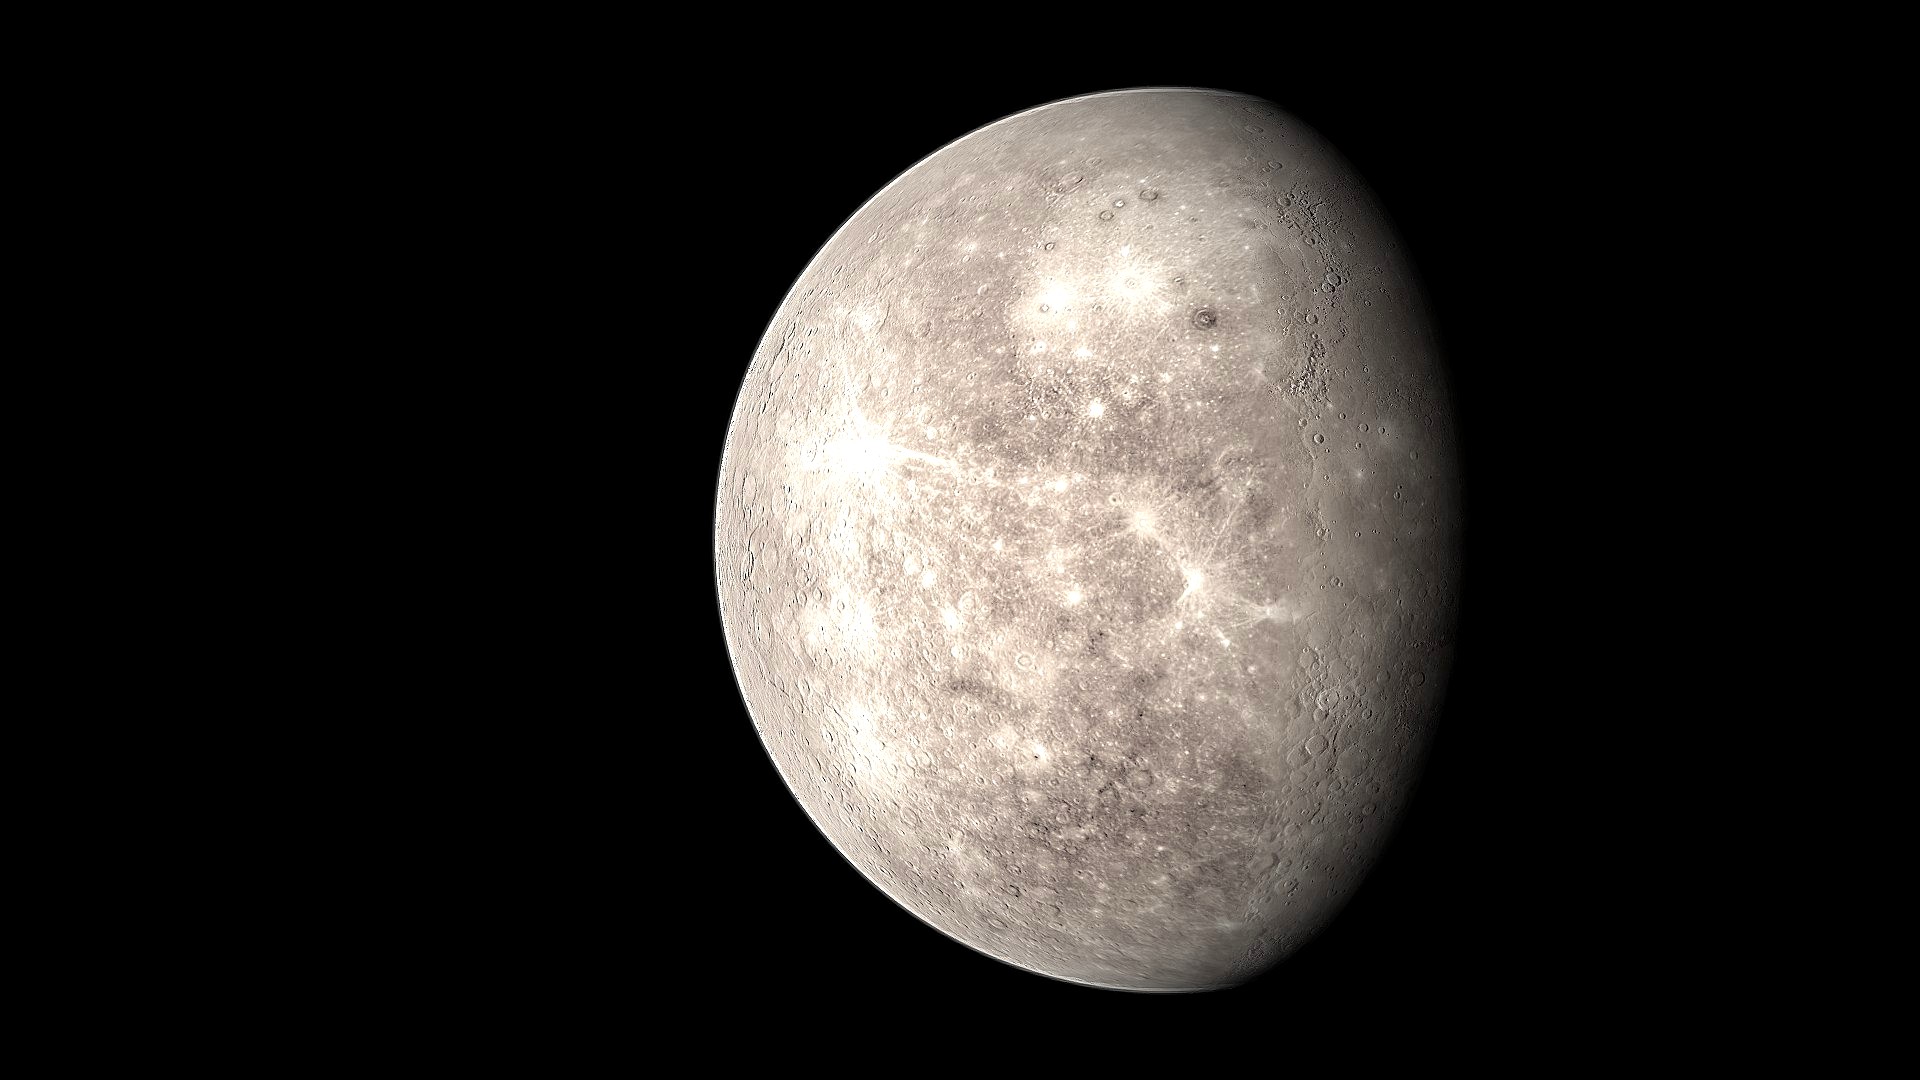 Realistic 4k Mercury Planet v1 / Planete Mercure